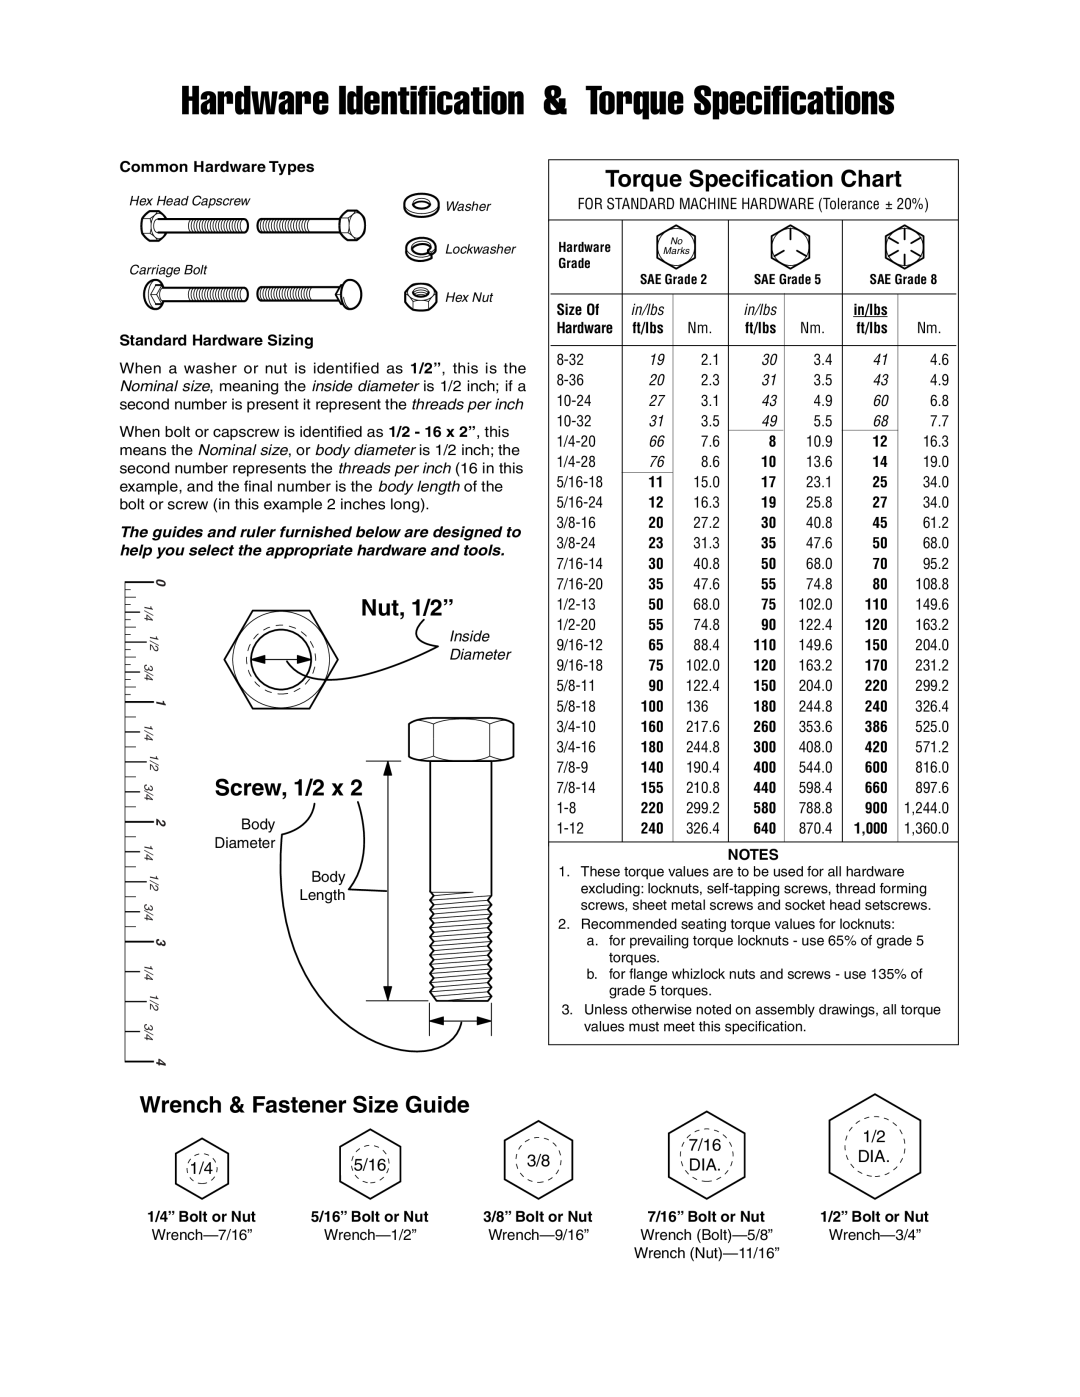 Simplicity Hydro Cut Series Hardware Identification & Torque Specifications, Torque Specification Chart, Nut, 1/2”, 7/16 